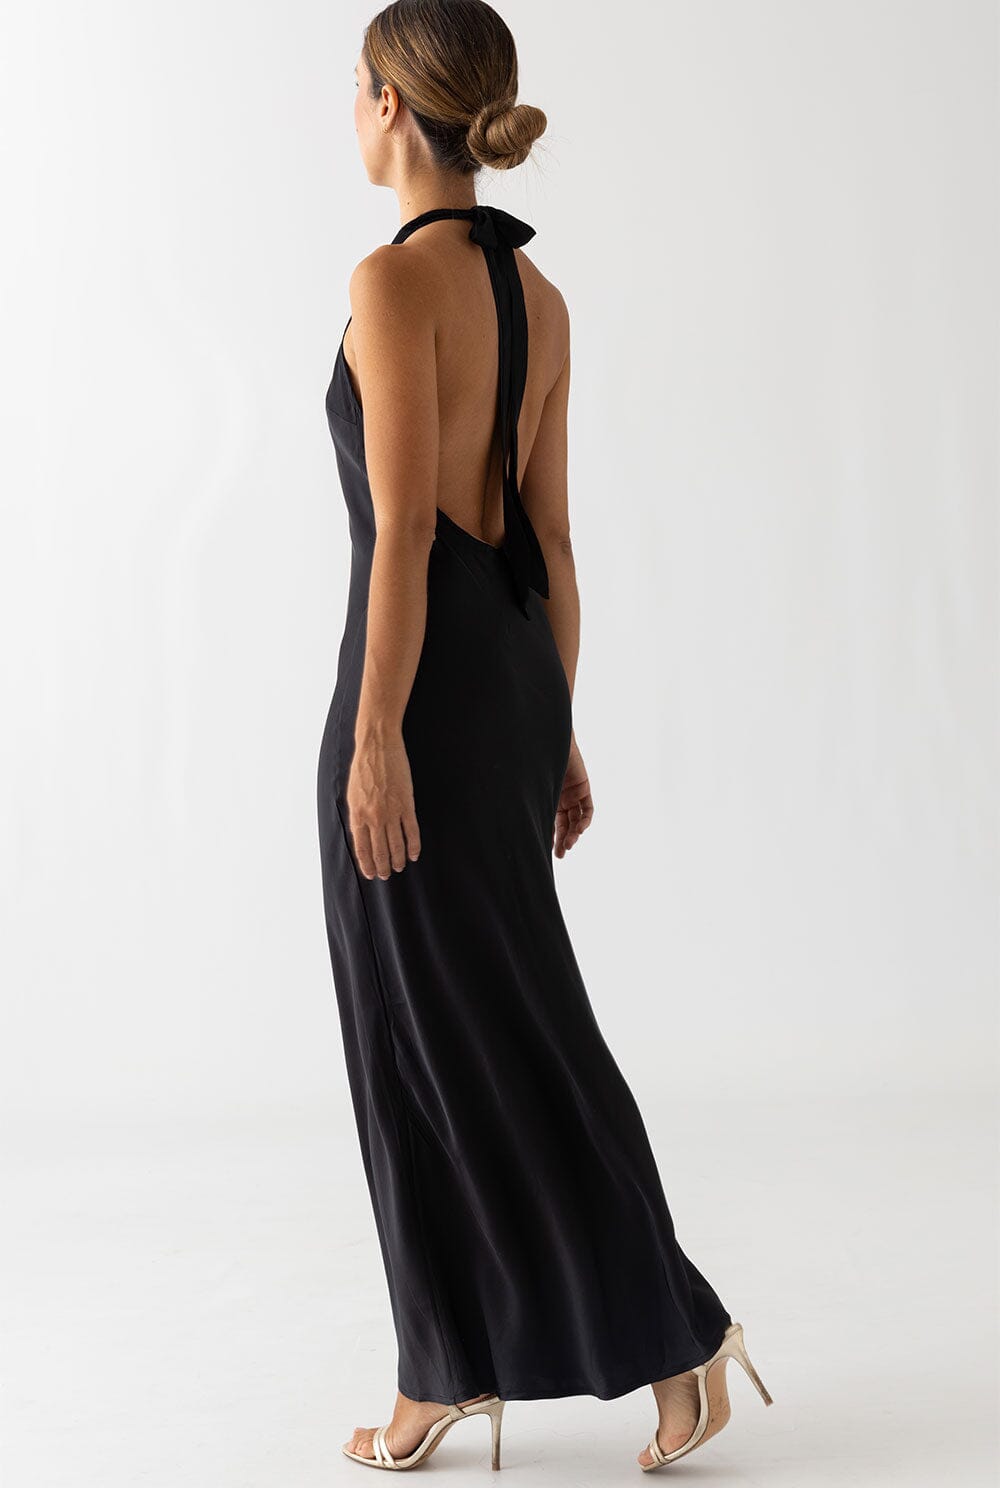 HALTER BLACK DRESS Dresses The Villã Concept 